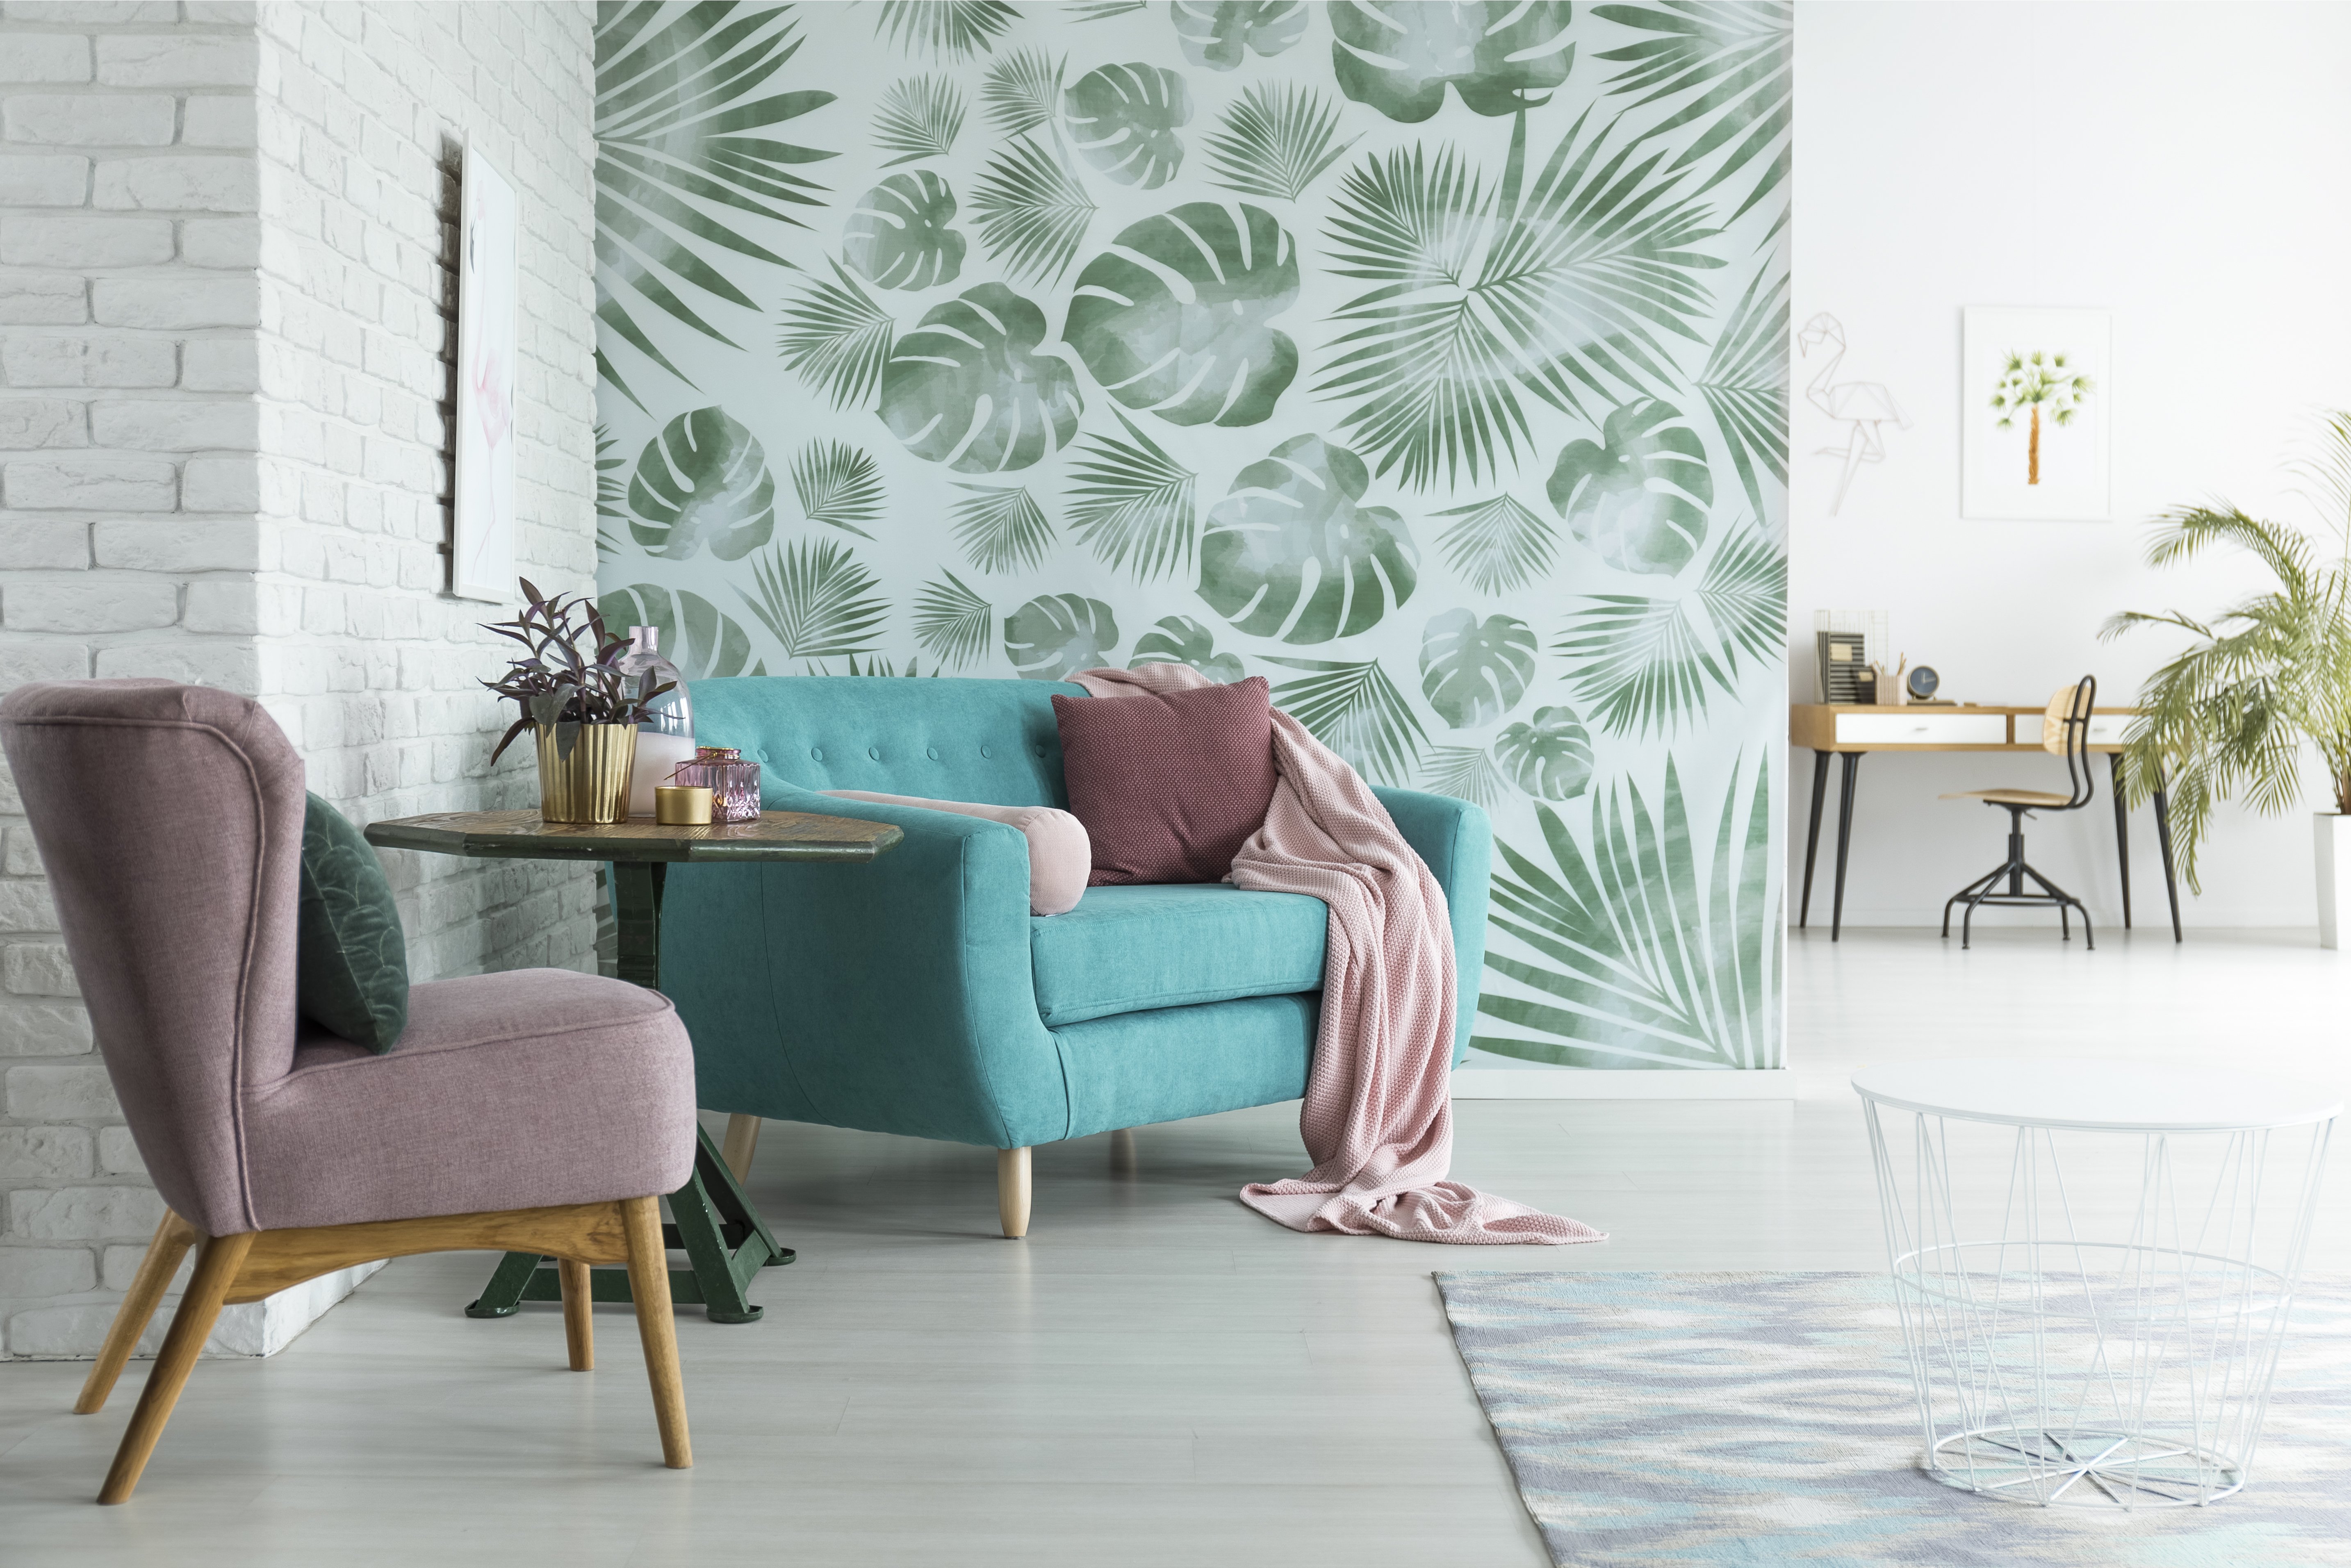 20 New Wall Designs for the Living Room in 2020 - HomeLane Blog